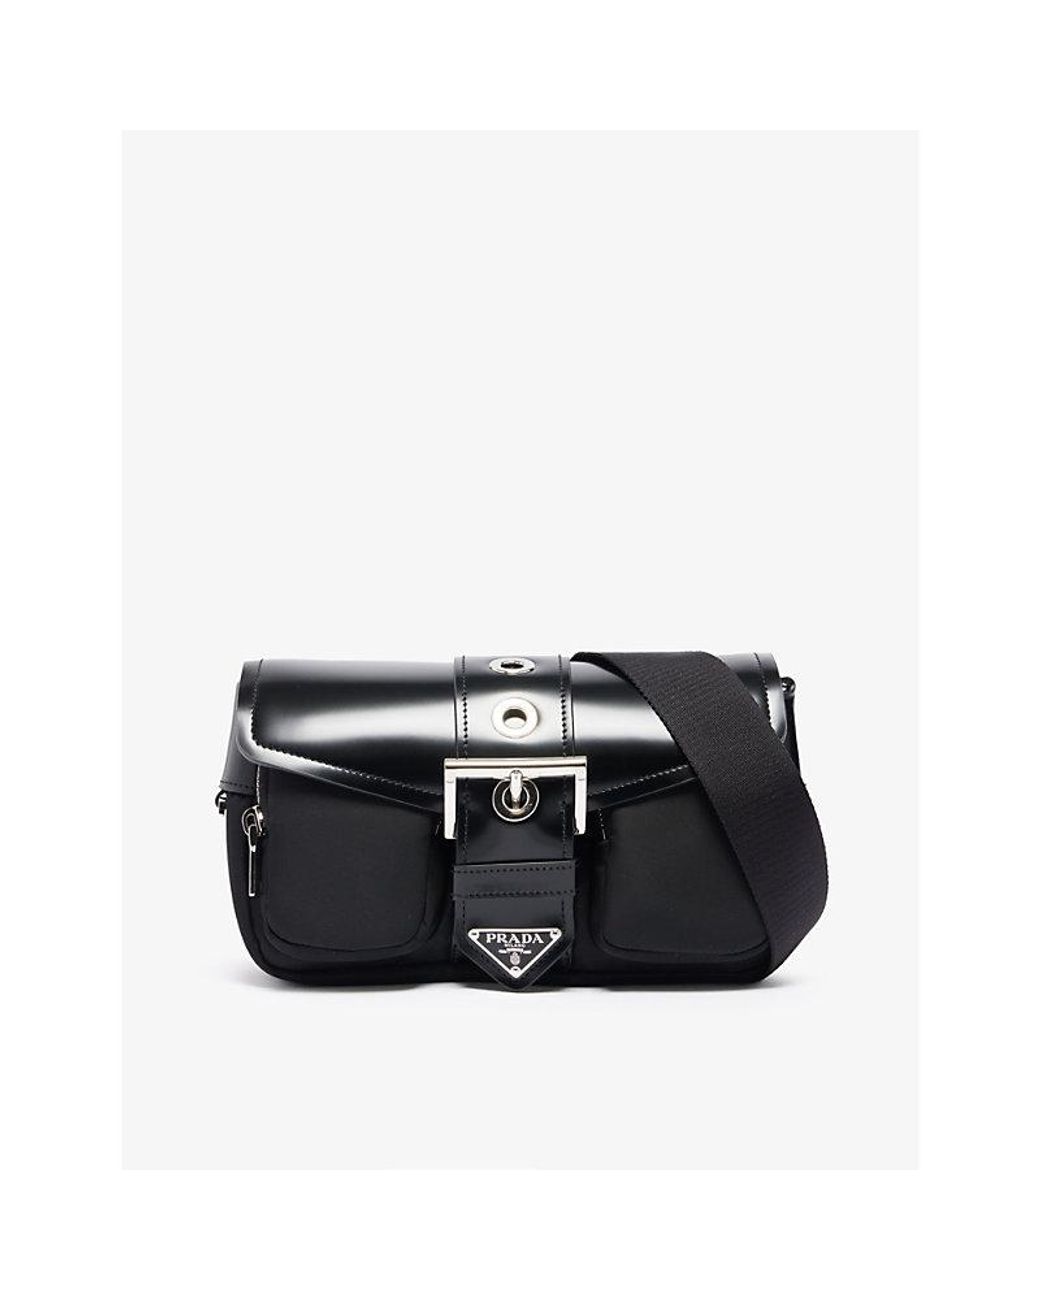 Prada Logo Plaque Clutch Bag Black in Nylon with Silver-tone - US